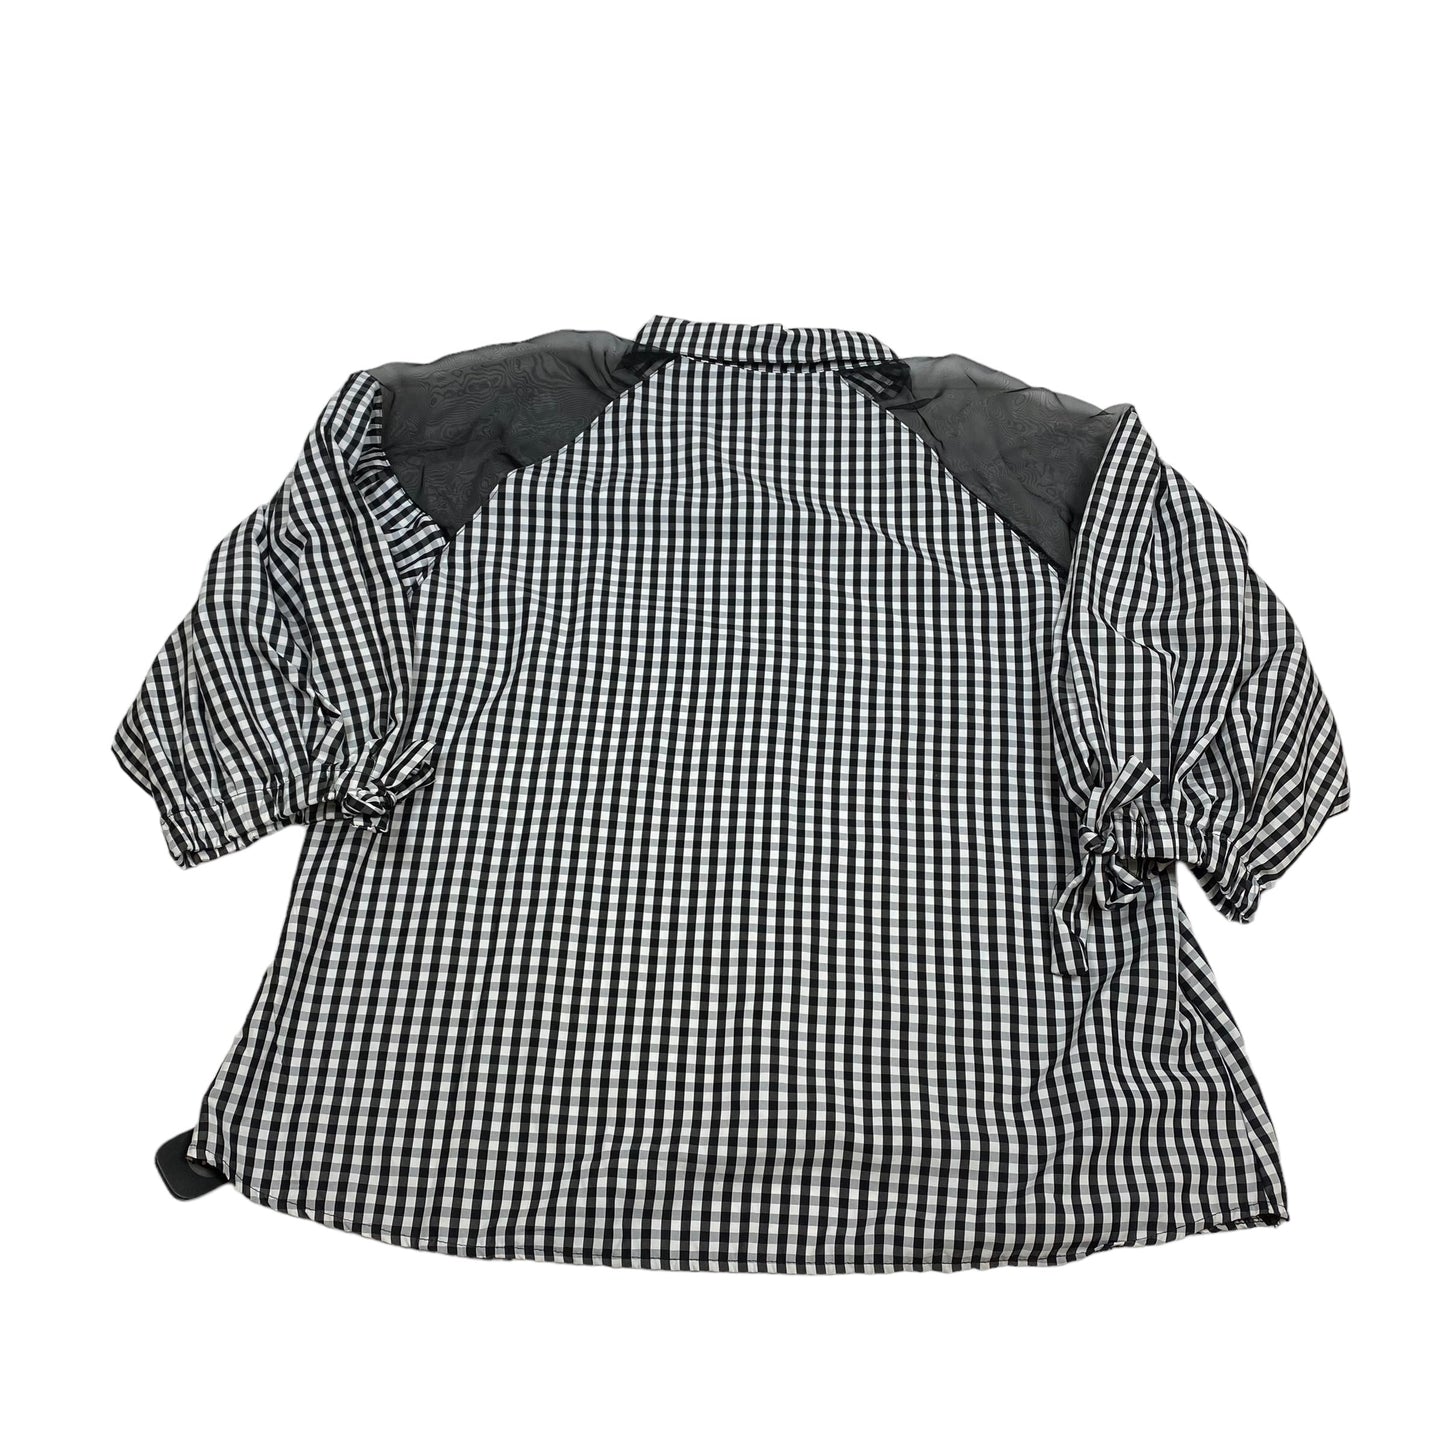 Black & White Top Long Sleeve Dalin, Size 2x